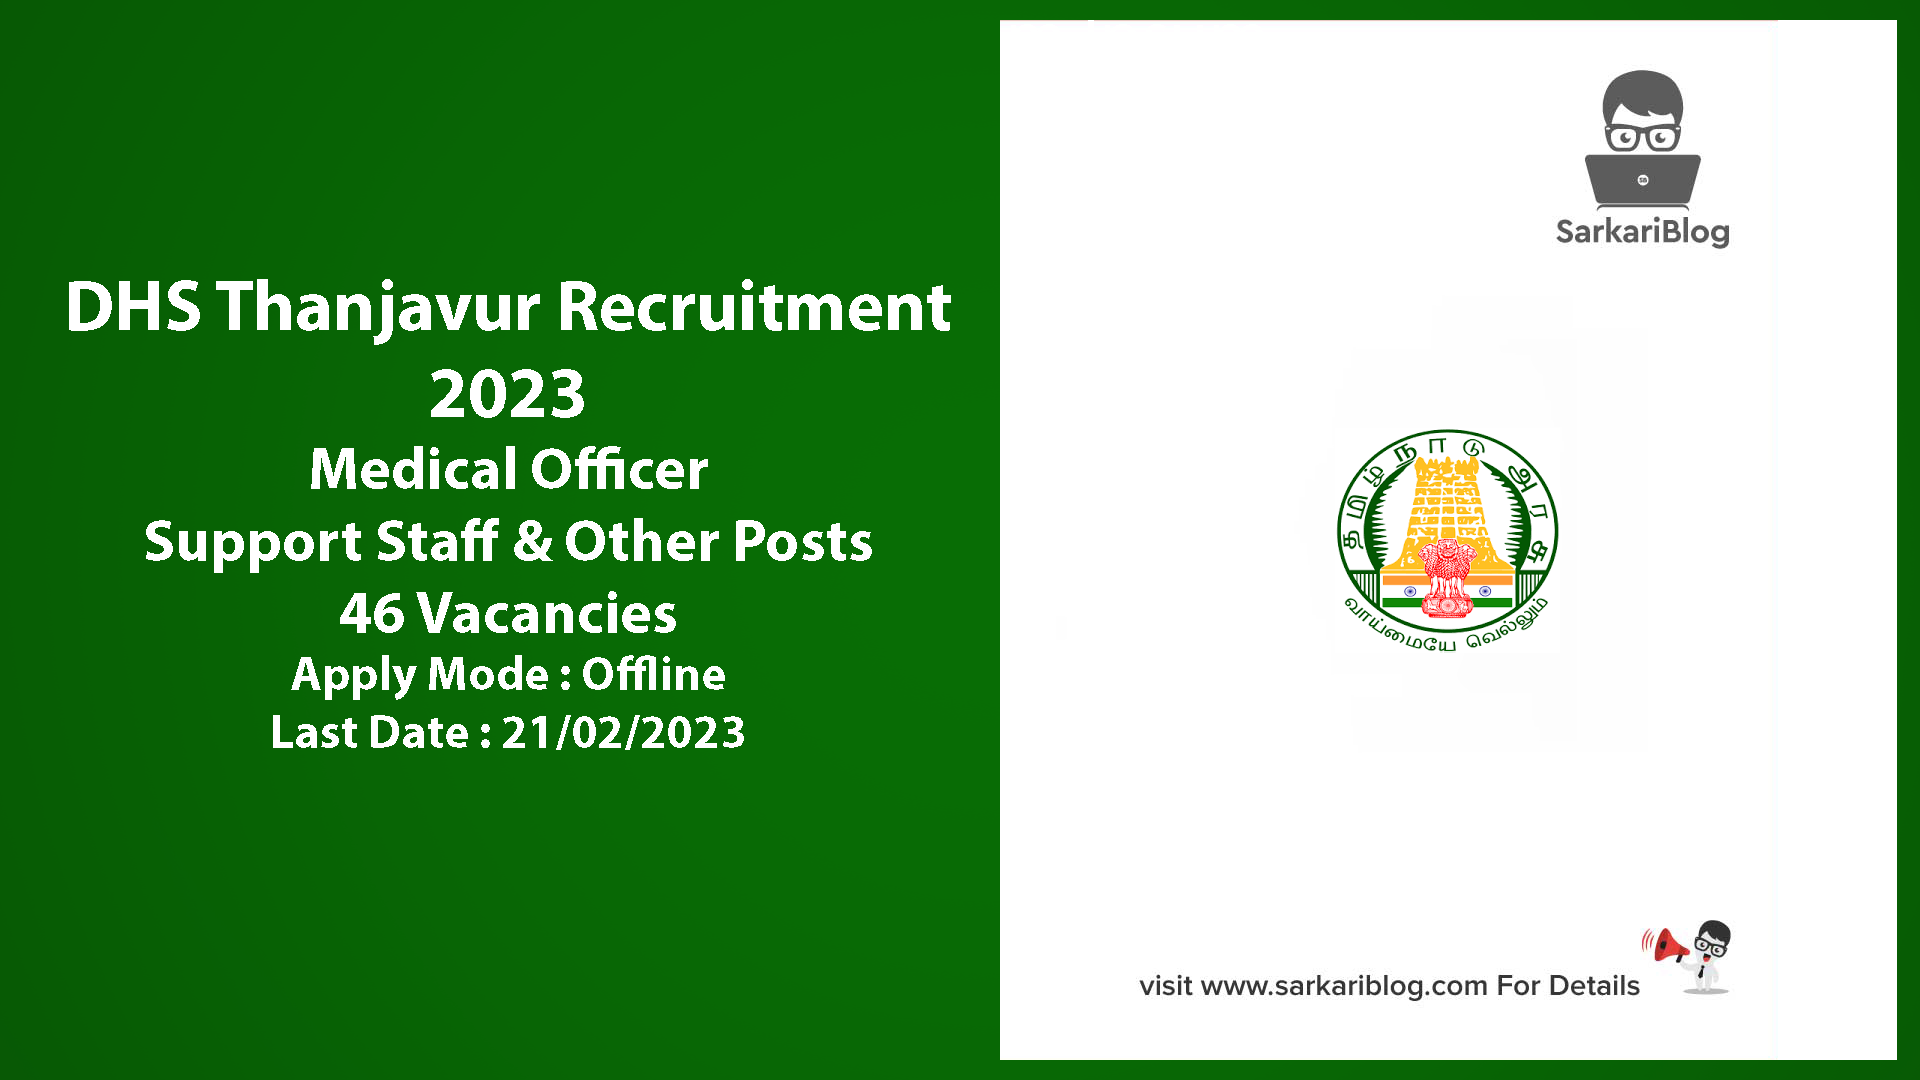 DHS Thanjavur recruitment 2023